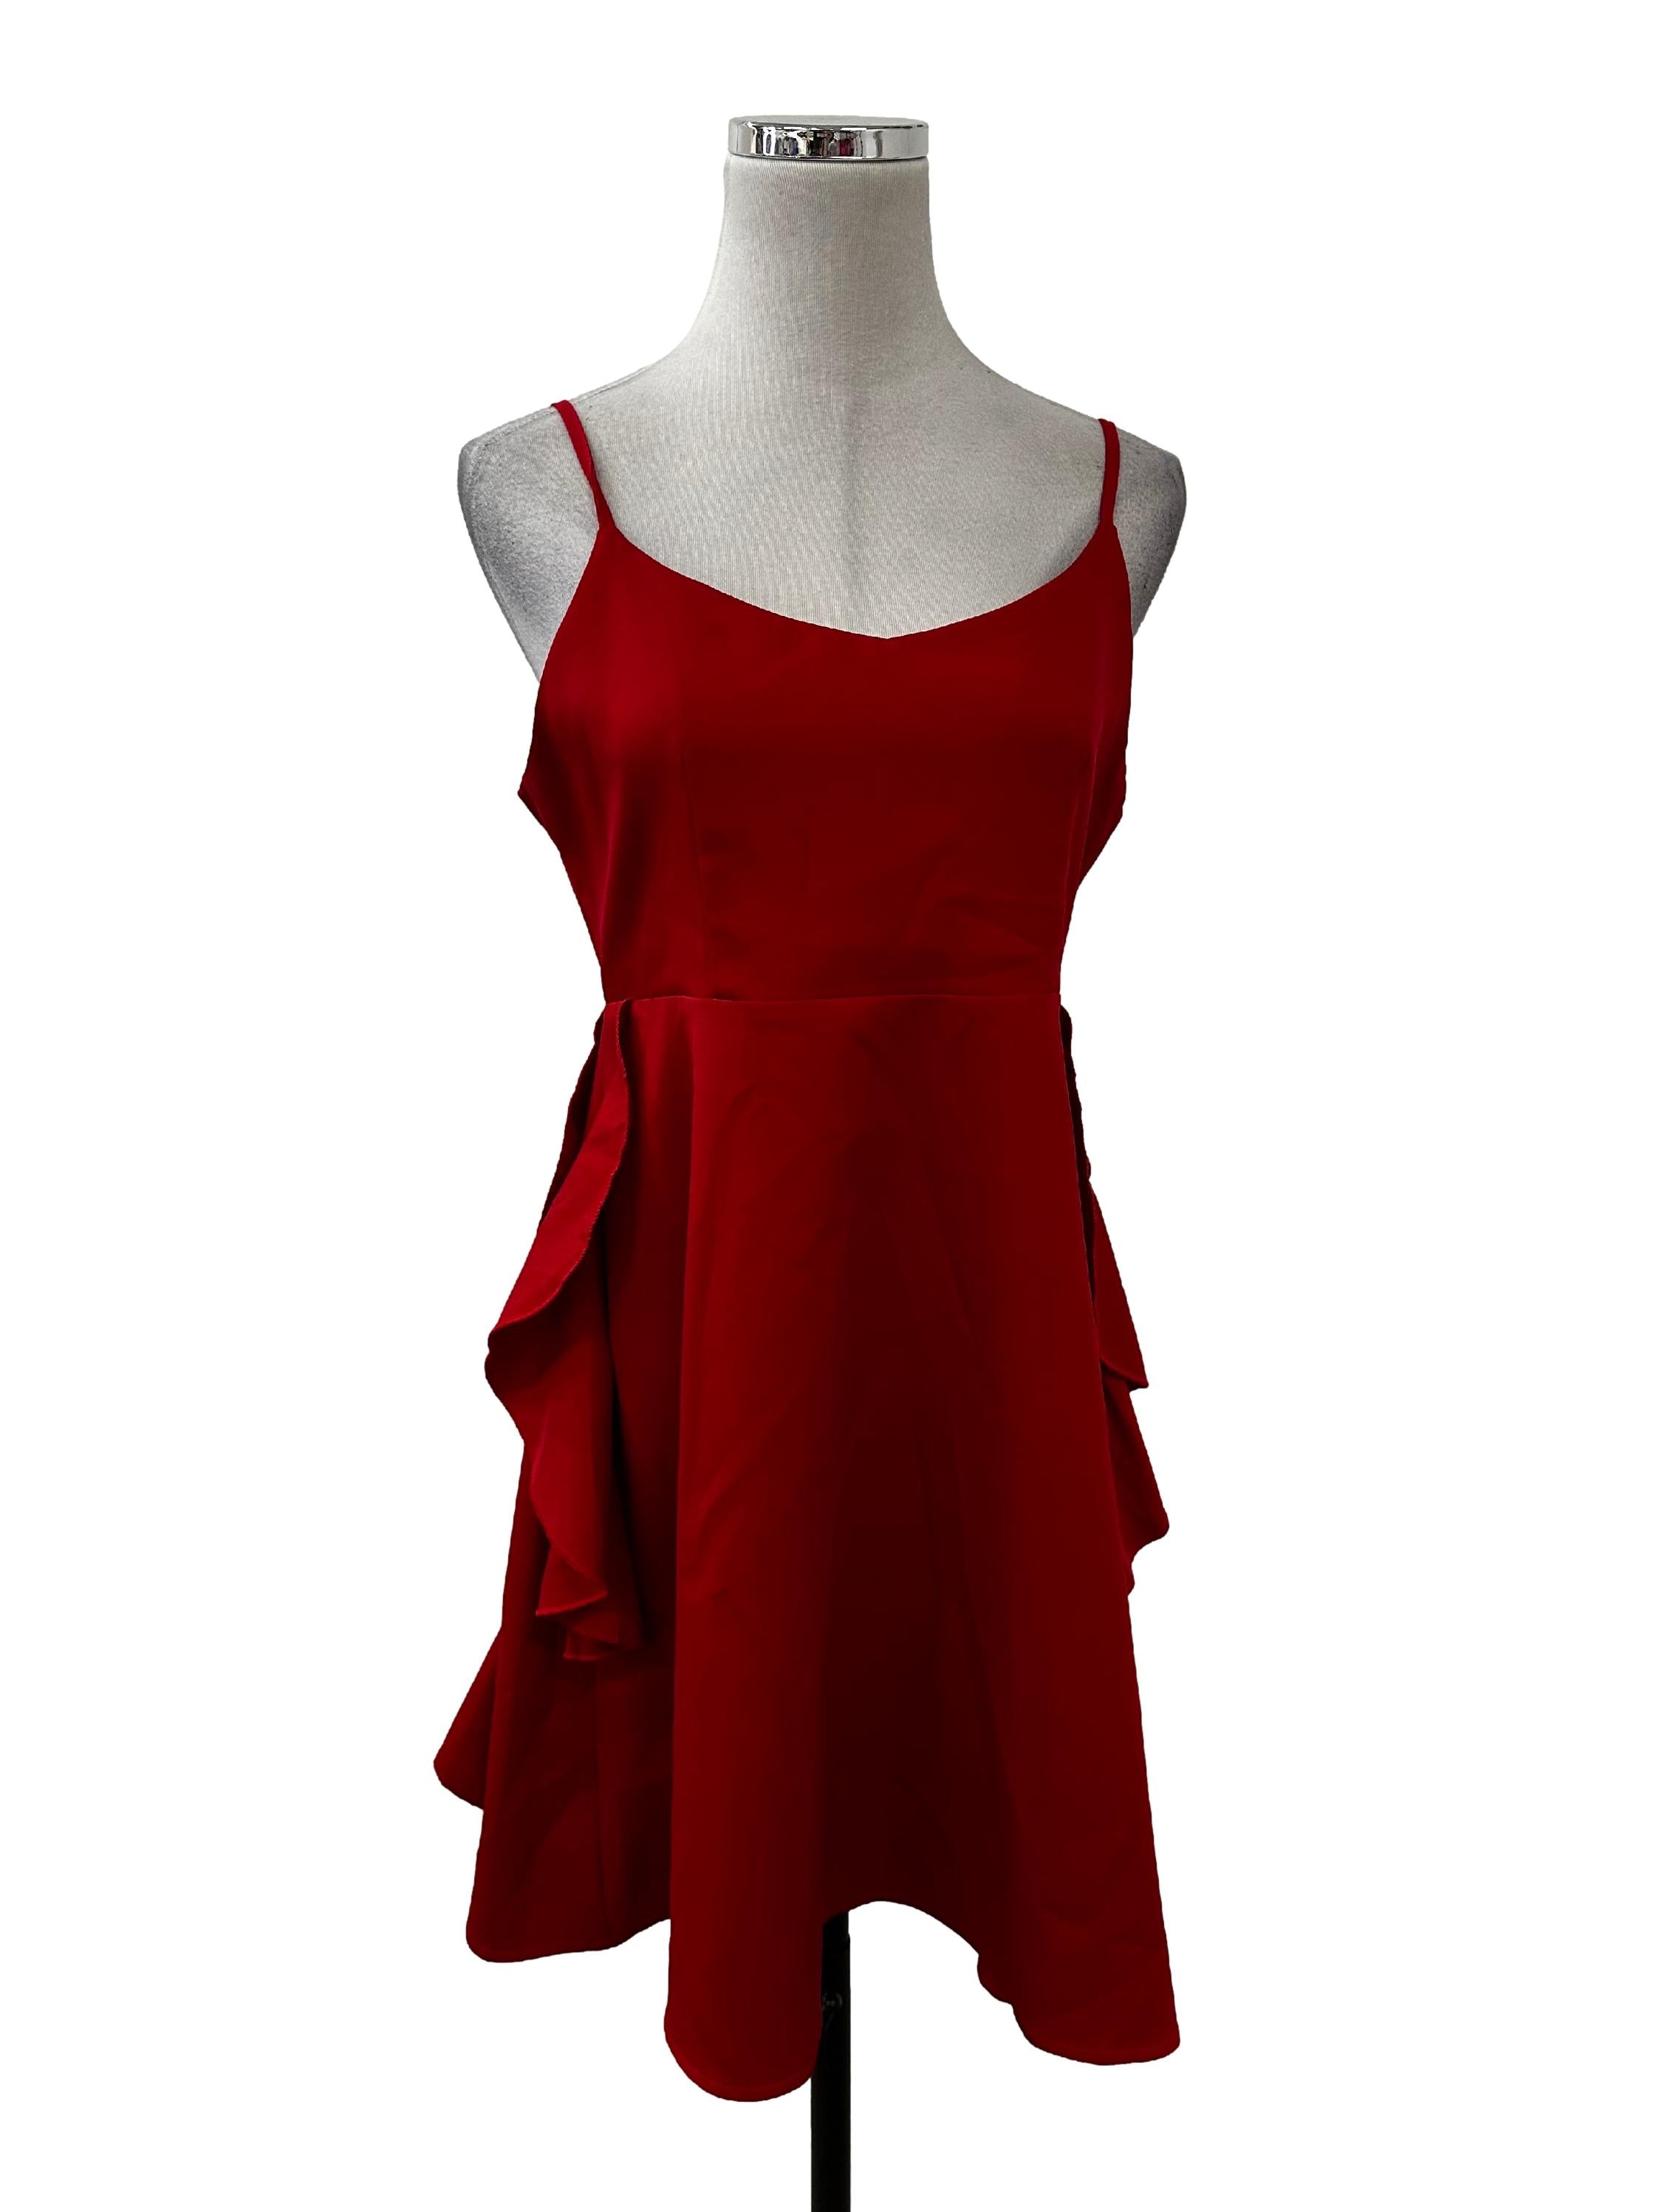 Candy Red Ruffle Dress